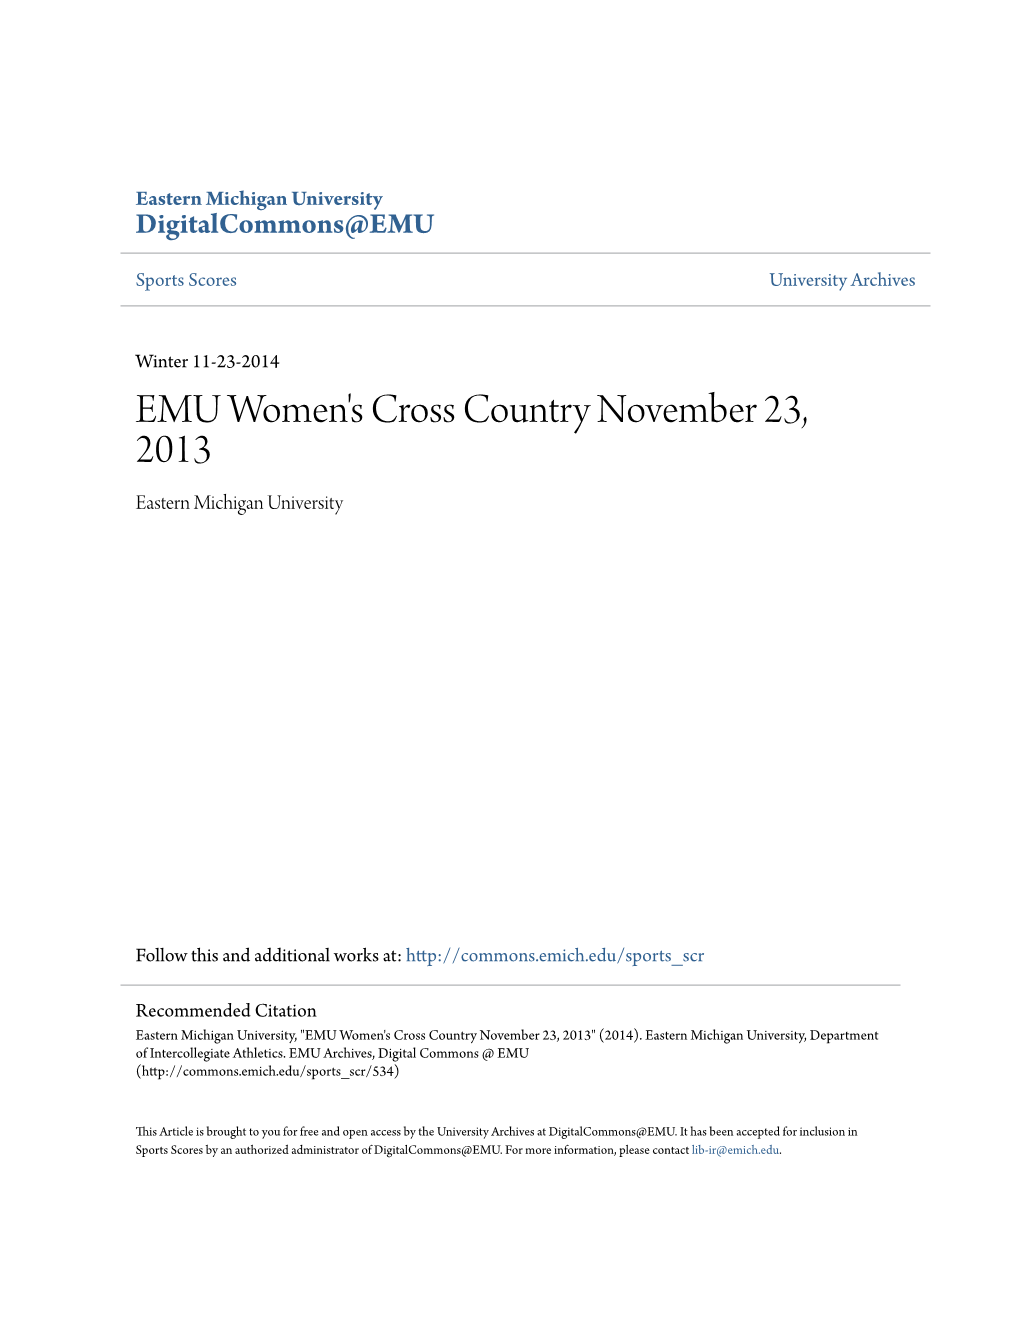 EMU Women's Cross Country November 23, 2013 Eastern Michigan University